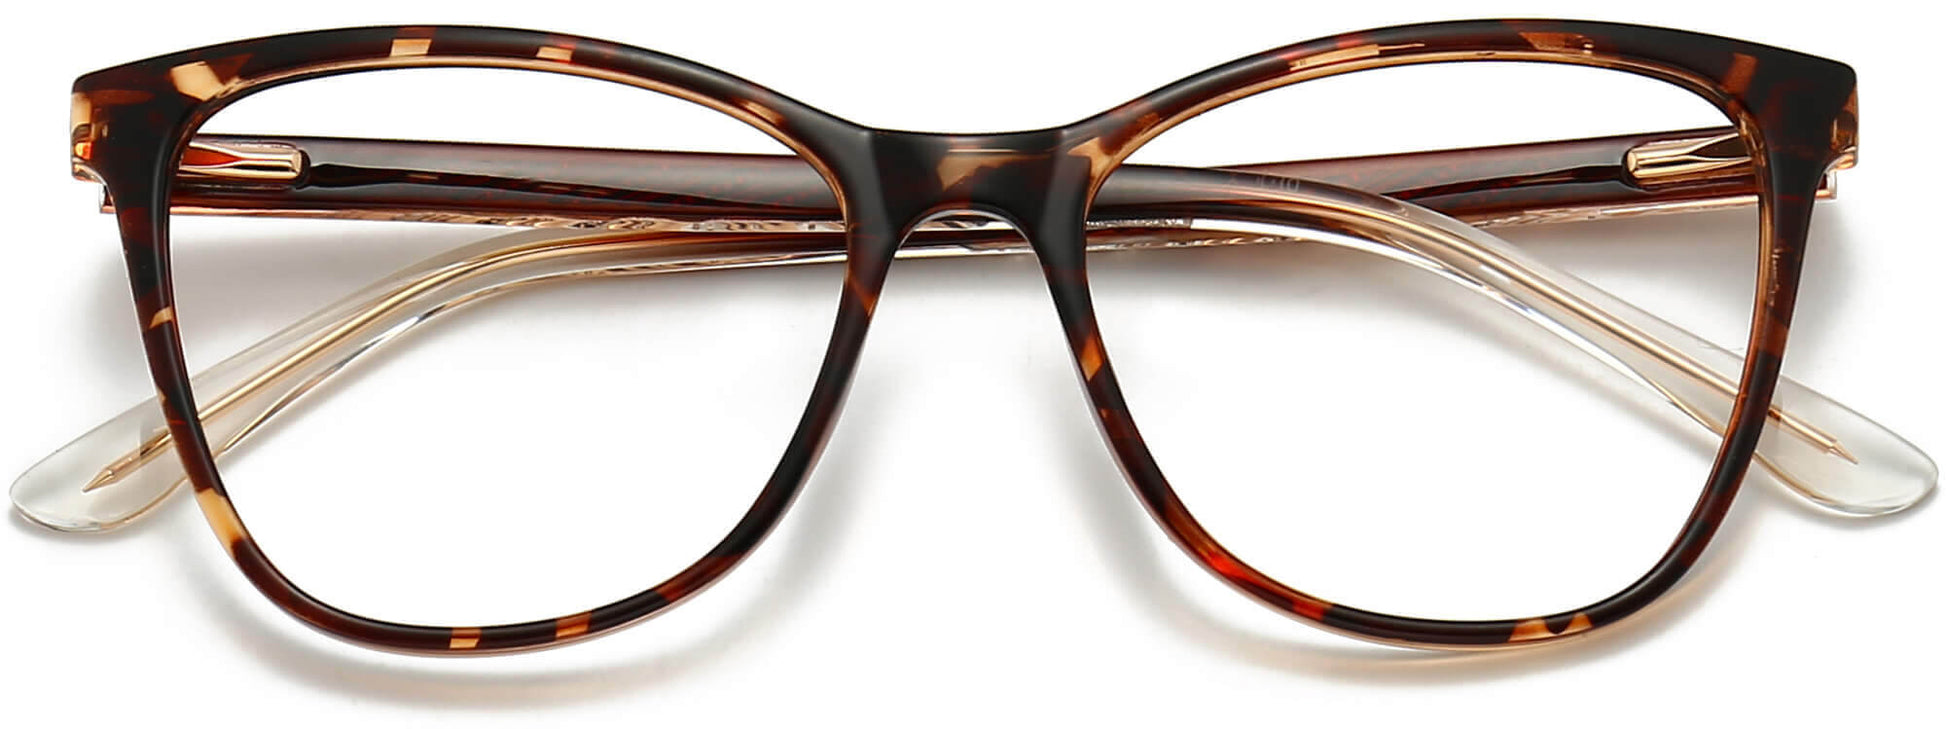 Makenzie Cateye Tortoise Eyeglasses from ANRRI, closed view